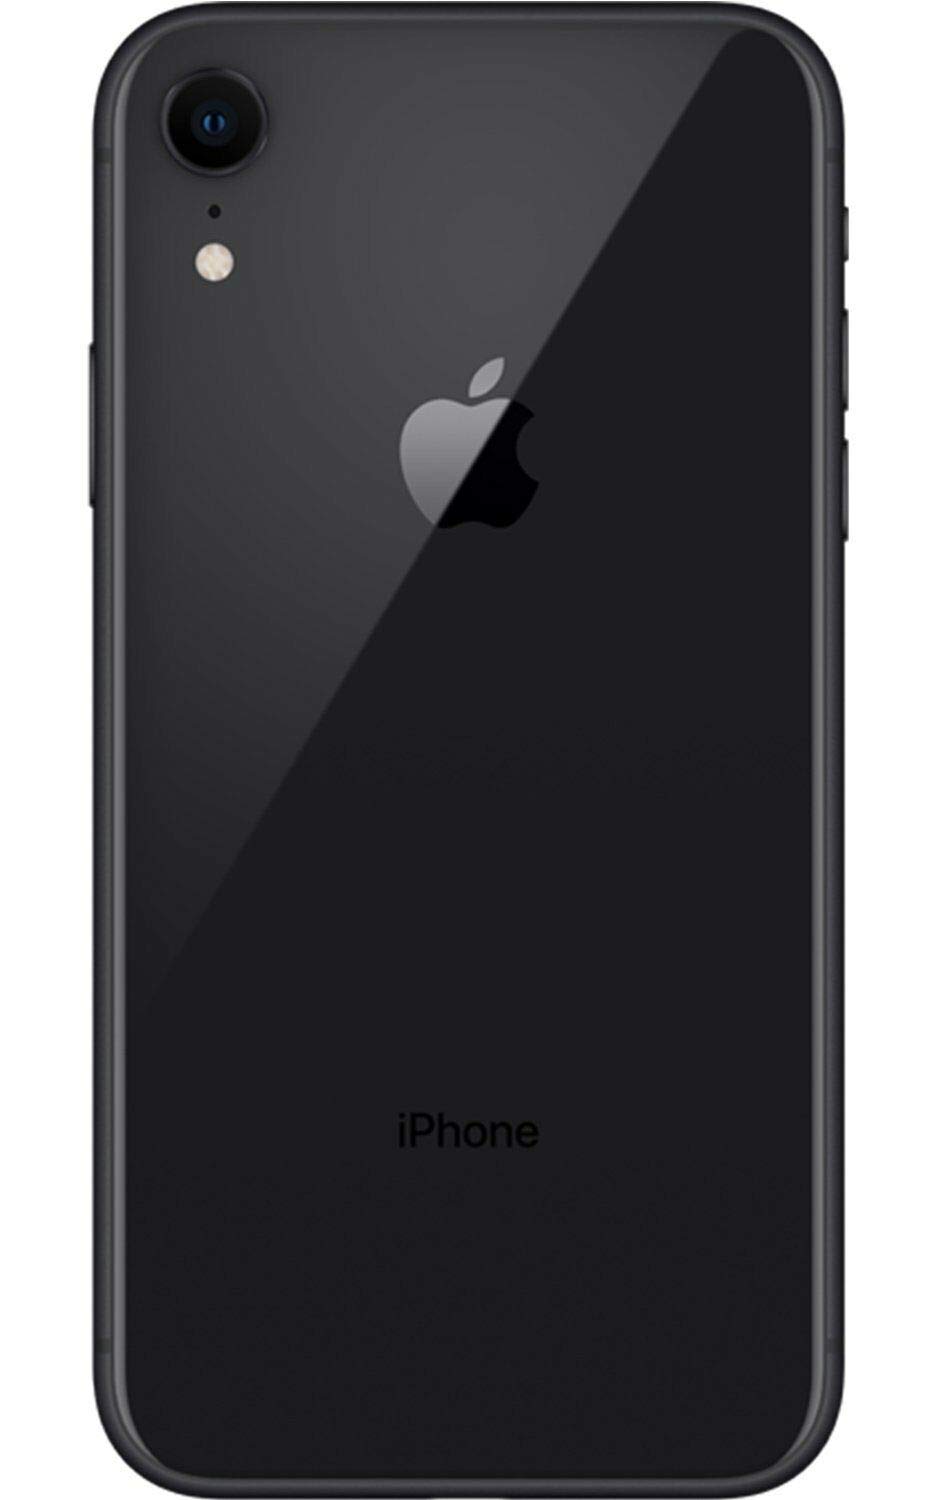 Apple-iPhone XR-Fully Unlocked-64GB-Black-Used Condition C Grade | eBay